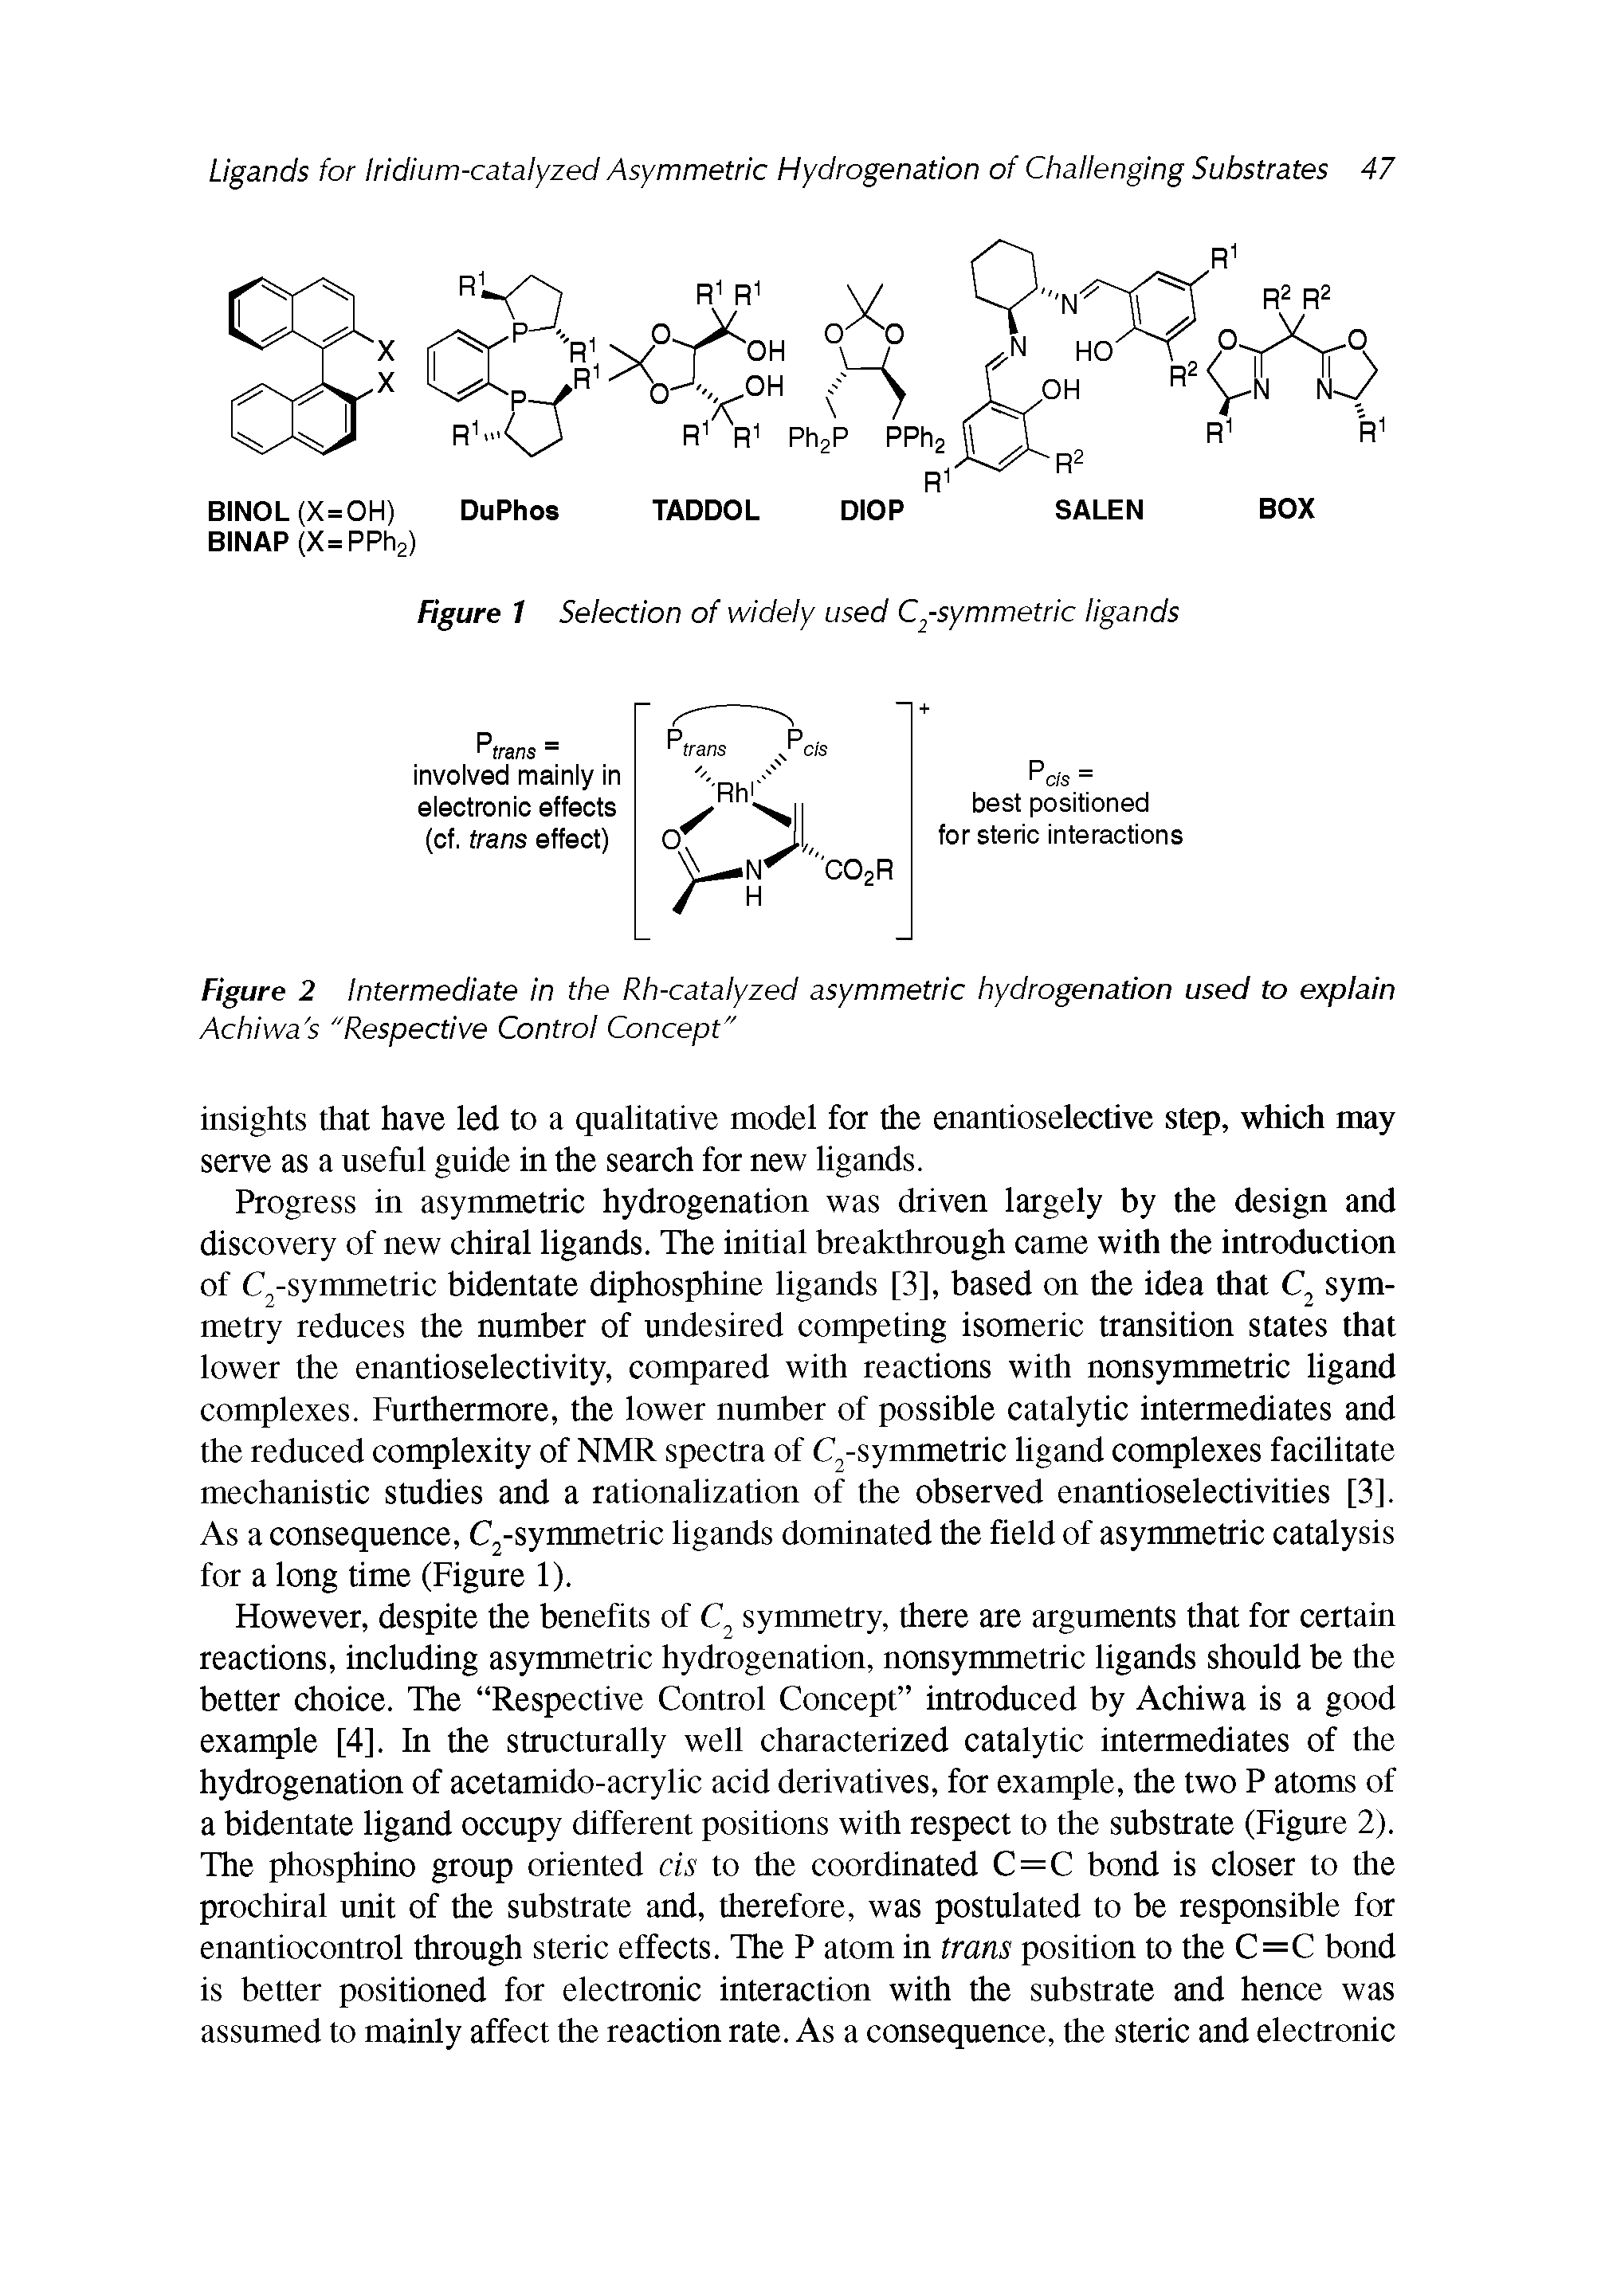 Figure 2 Intermediate in the Rh-catalyzed asymmetric hydrogenation used to explain Achiwa s "Respective Control Concept"...